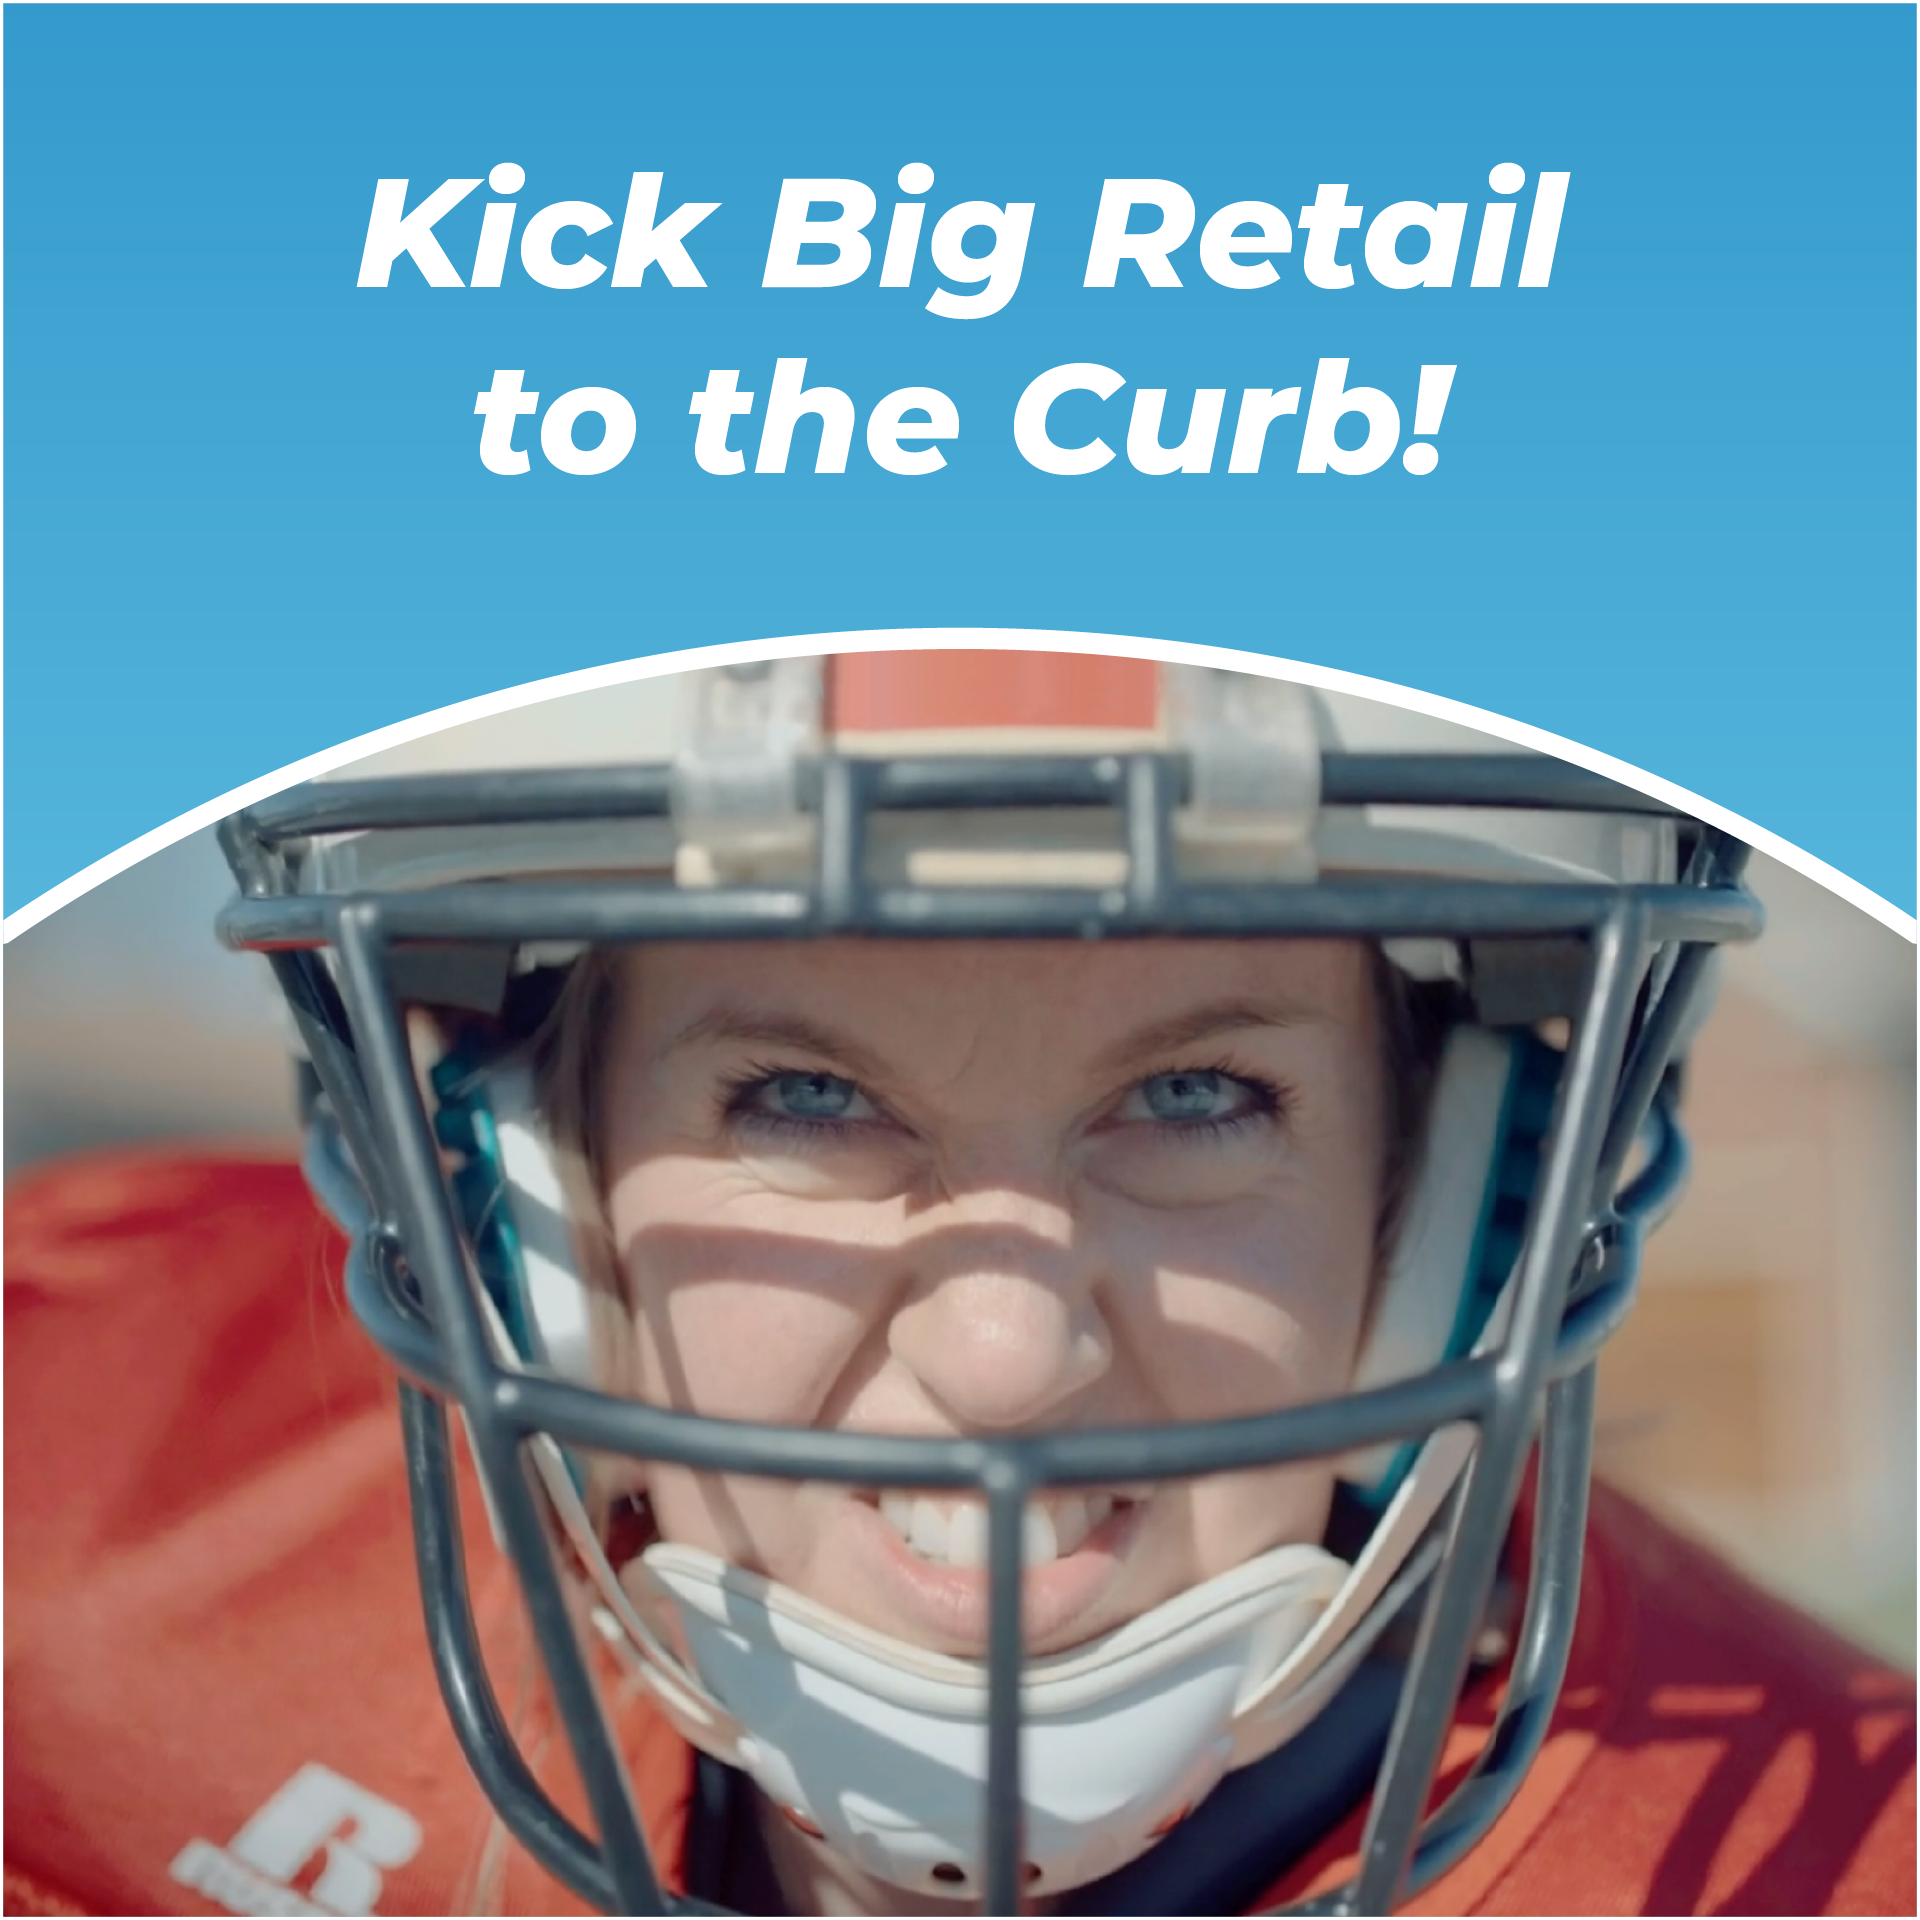 Kick Big Retail to the Curb!